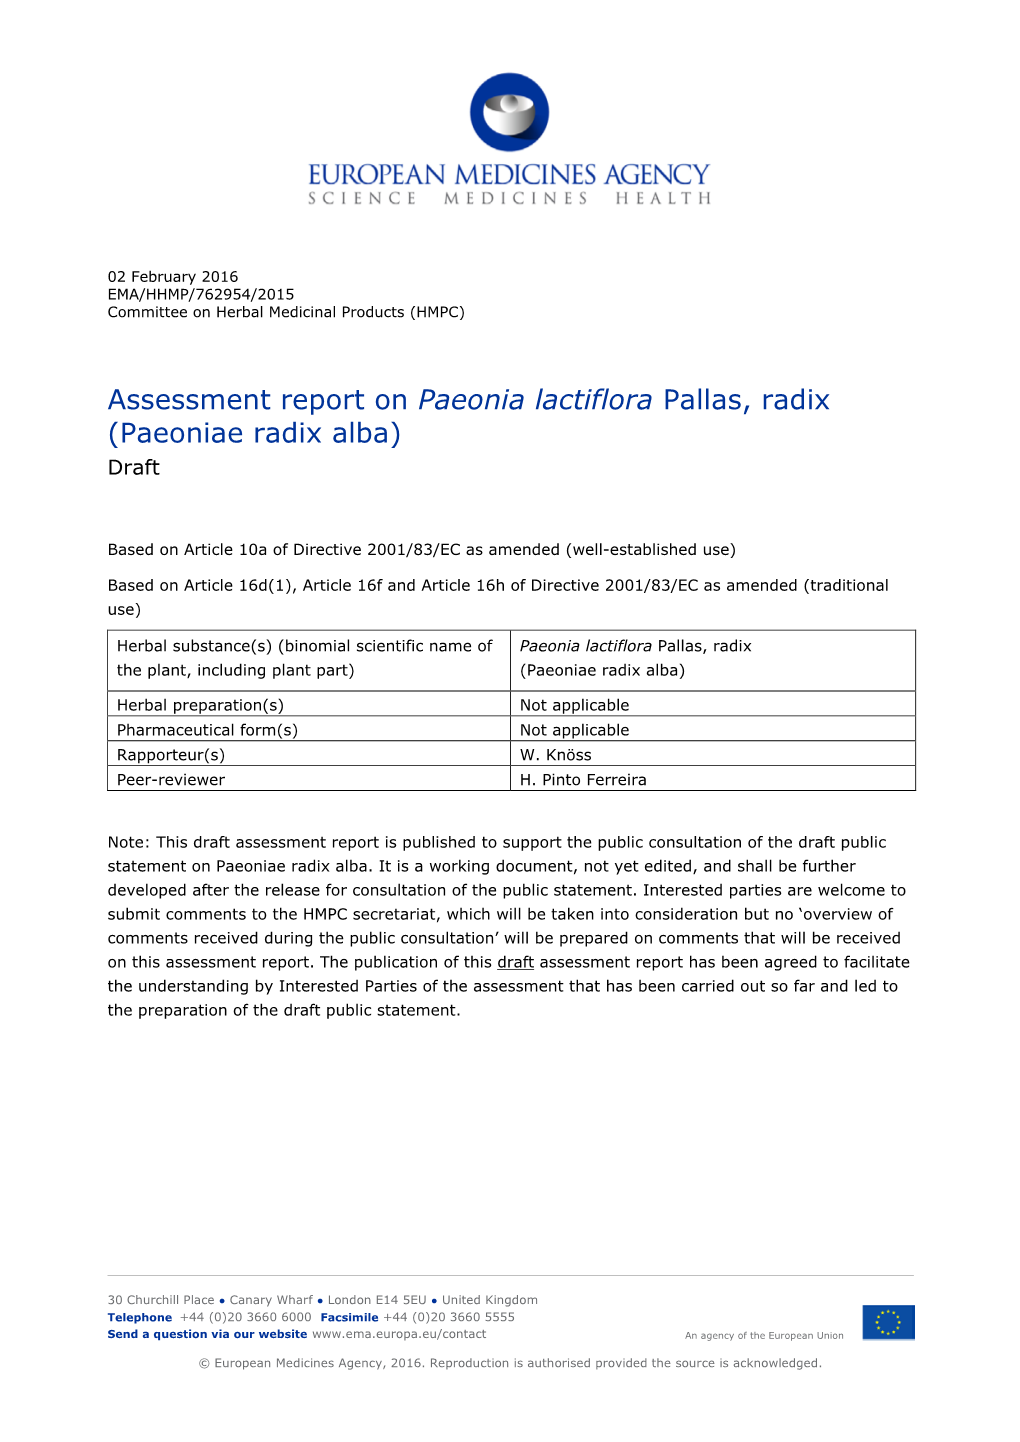 Assessment Report on Paeonia Lactiflora Pallas, Radix (Paeoniae Radix Alba) Draft